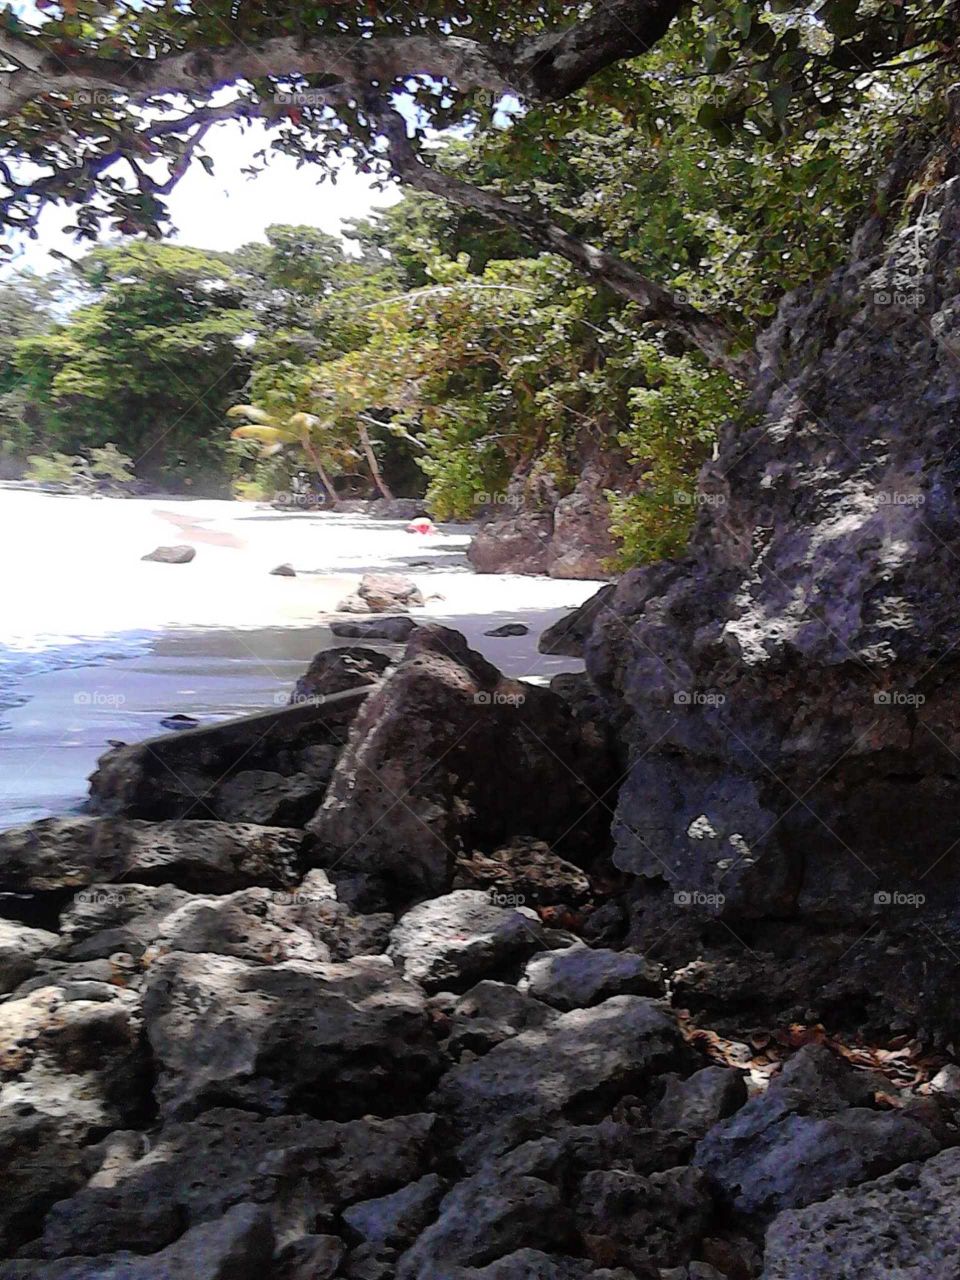 St Mary Jamaica beach view